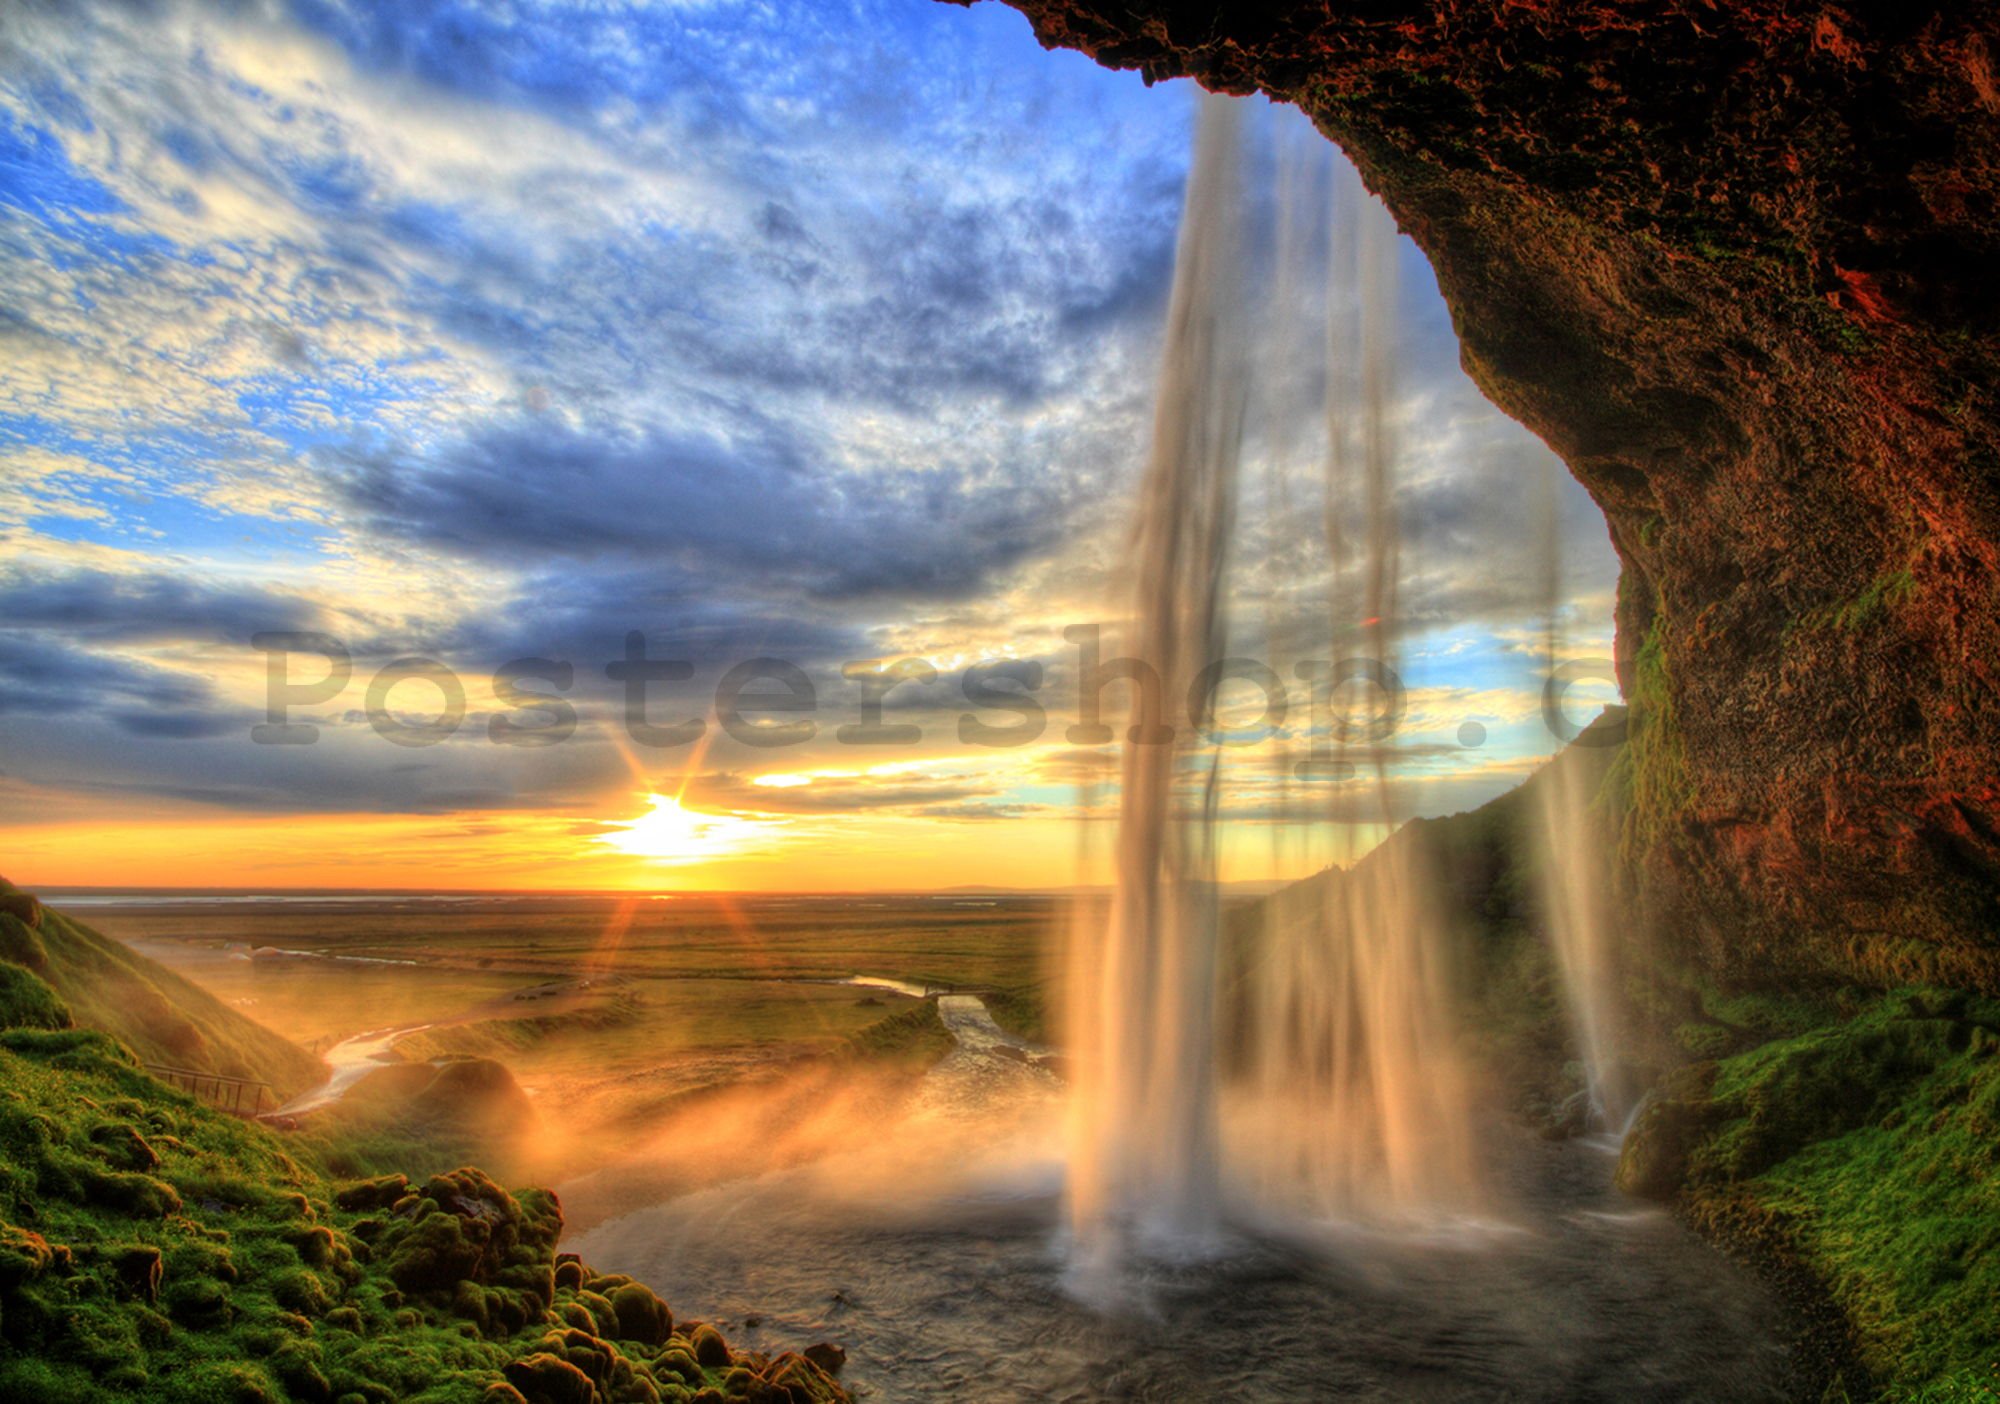 Fototapeta: Vodopád u západu slunce - 104x152,5 cm